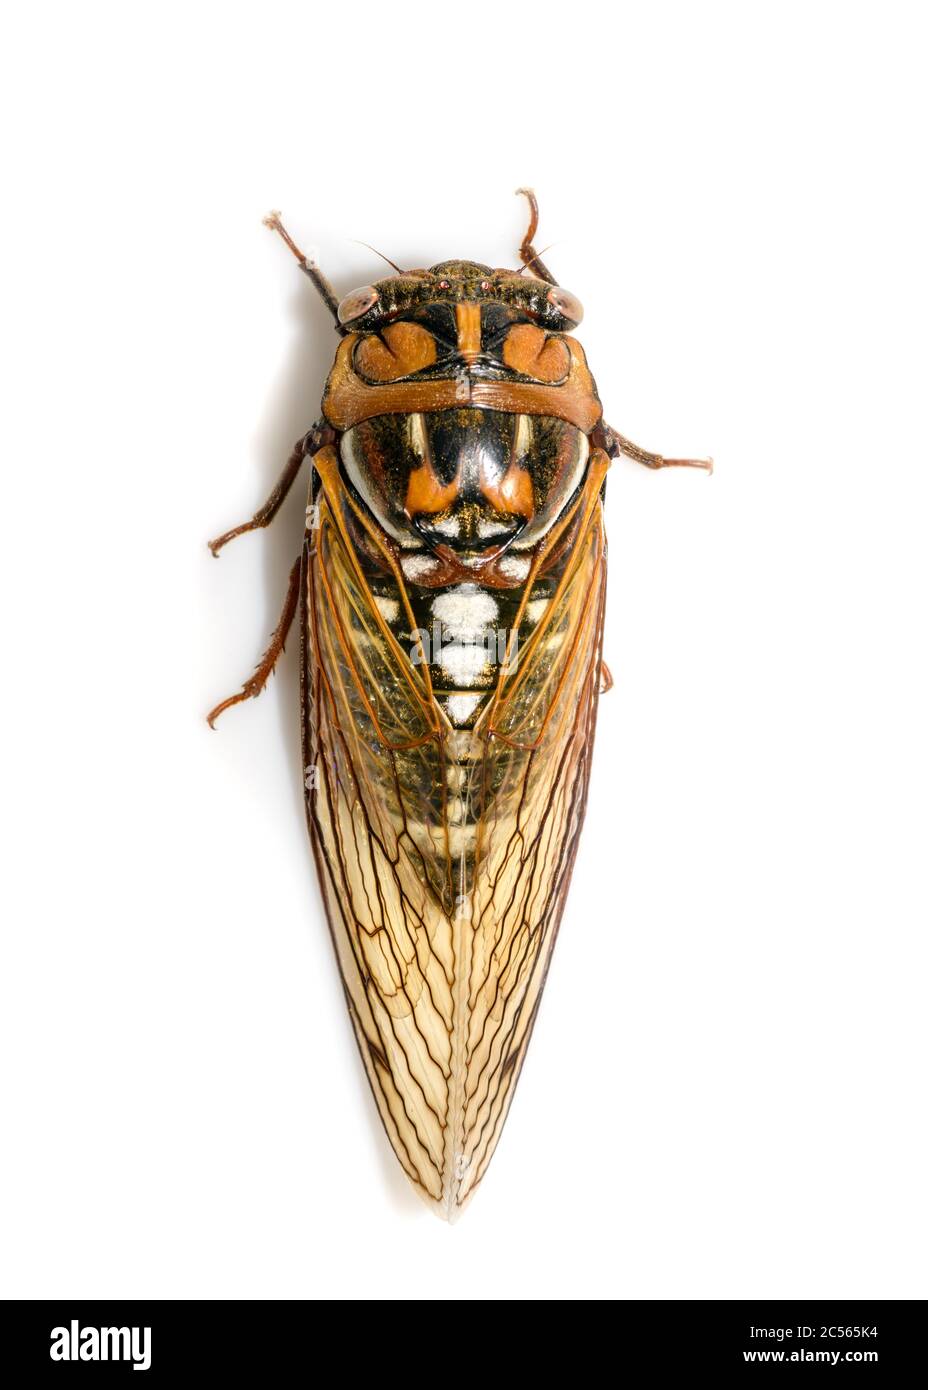 Bush cicada or giant grassland cicada -  Megatibicen dorsatus - on white background close-up, top view Stock Photo